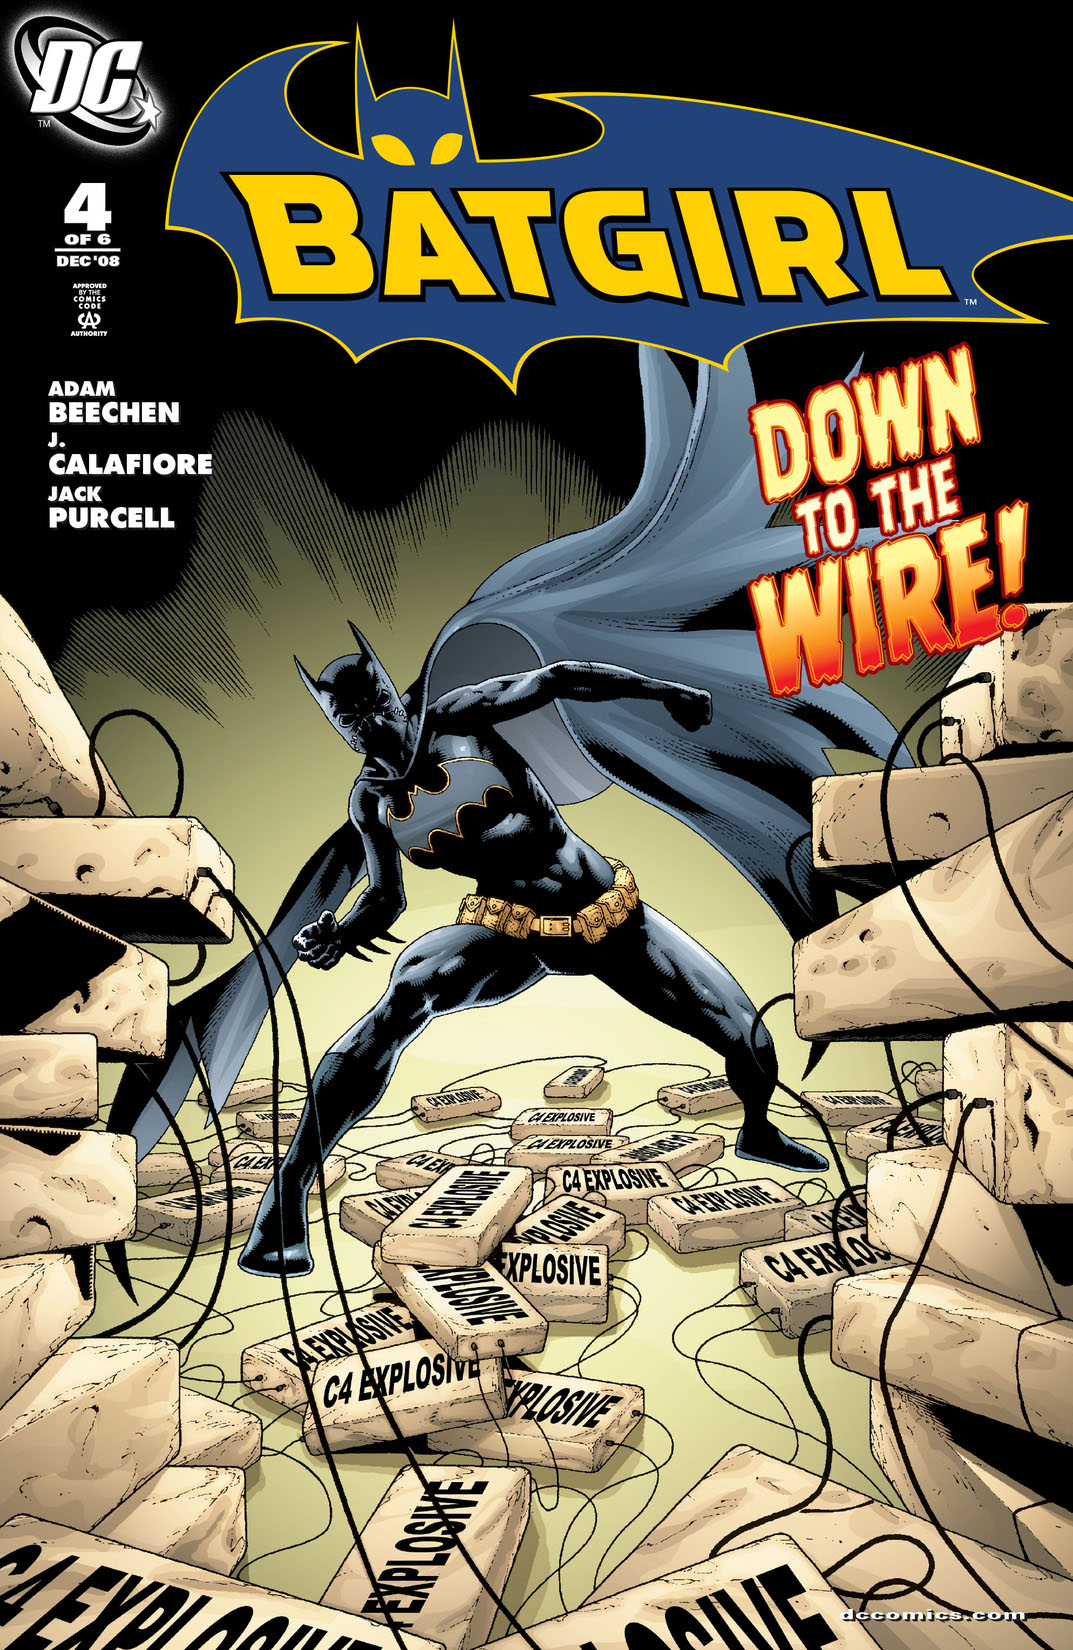 Batgirl (2008-) #4 preview images